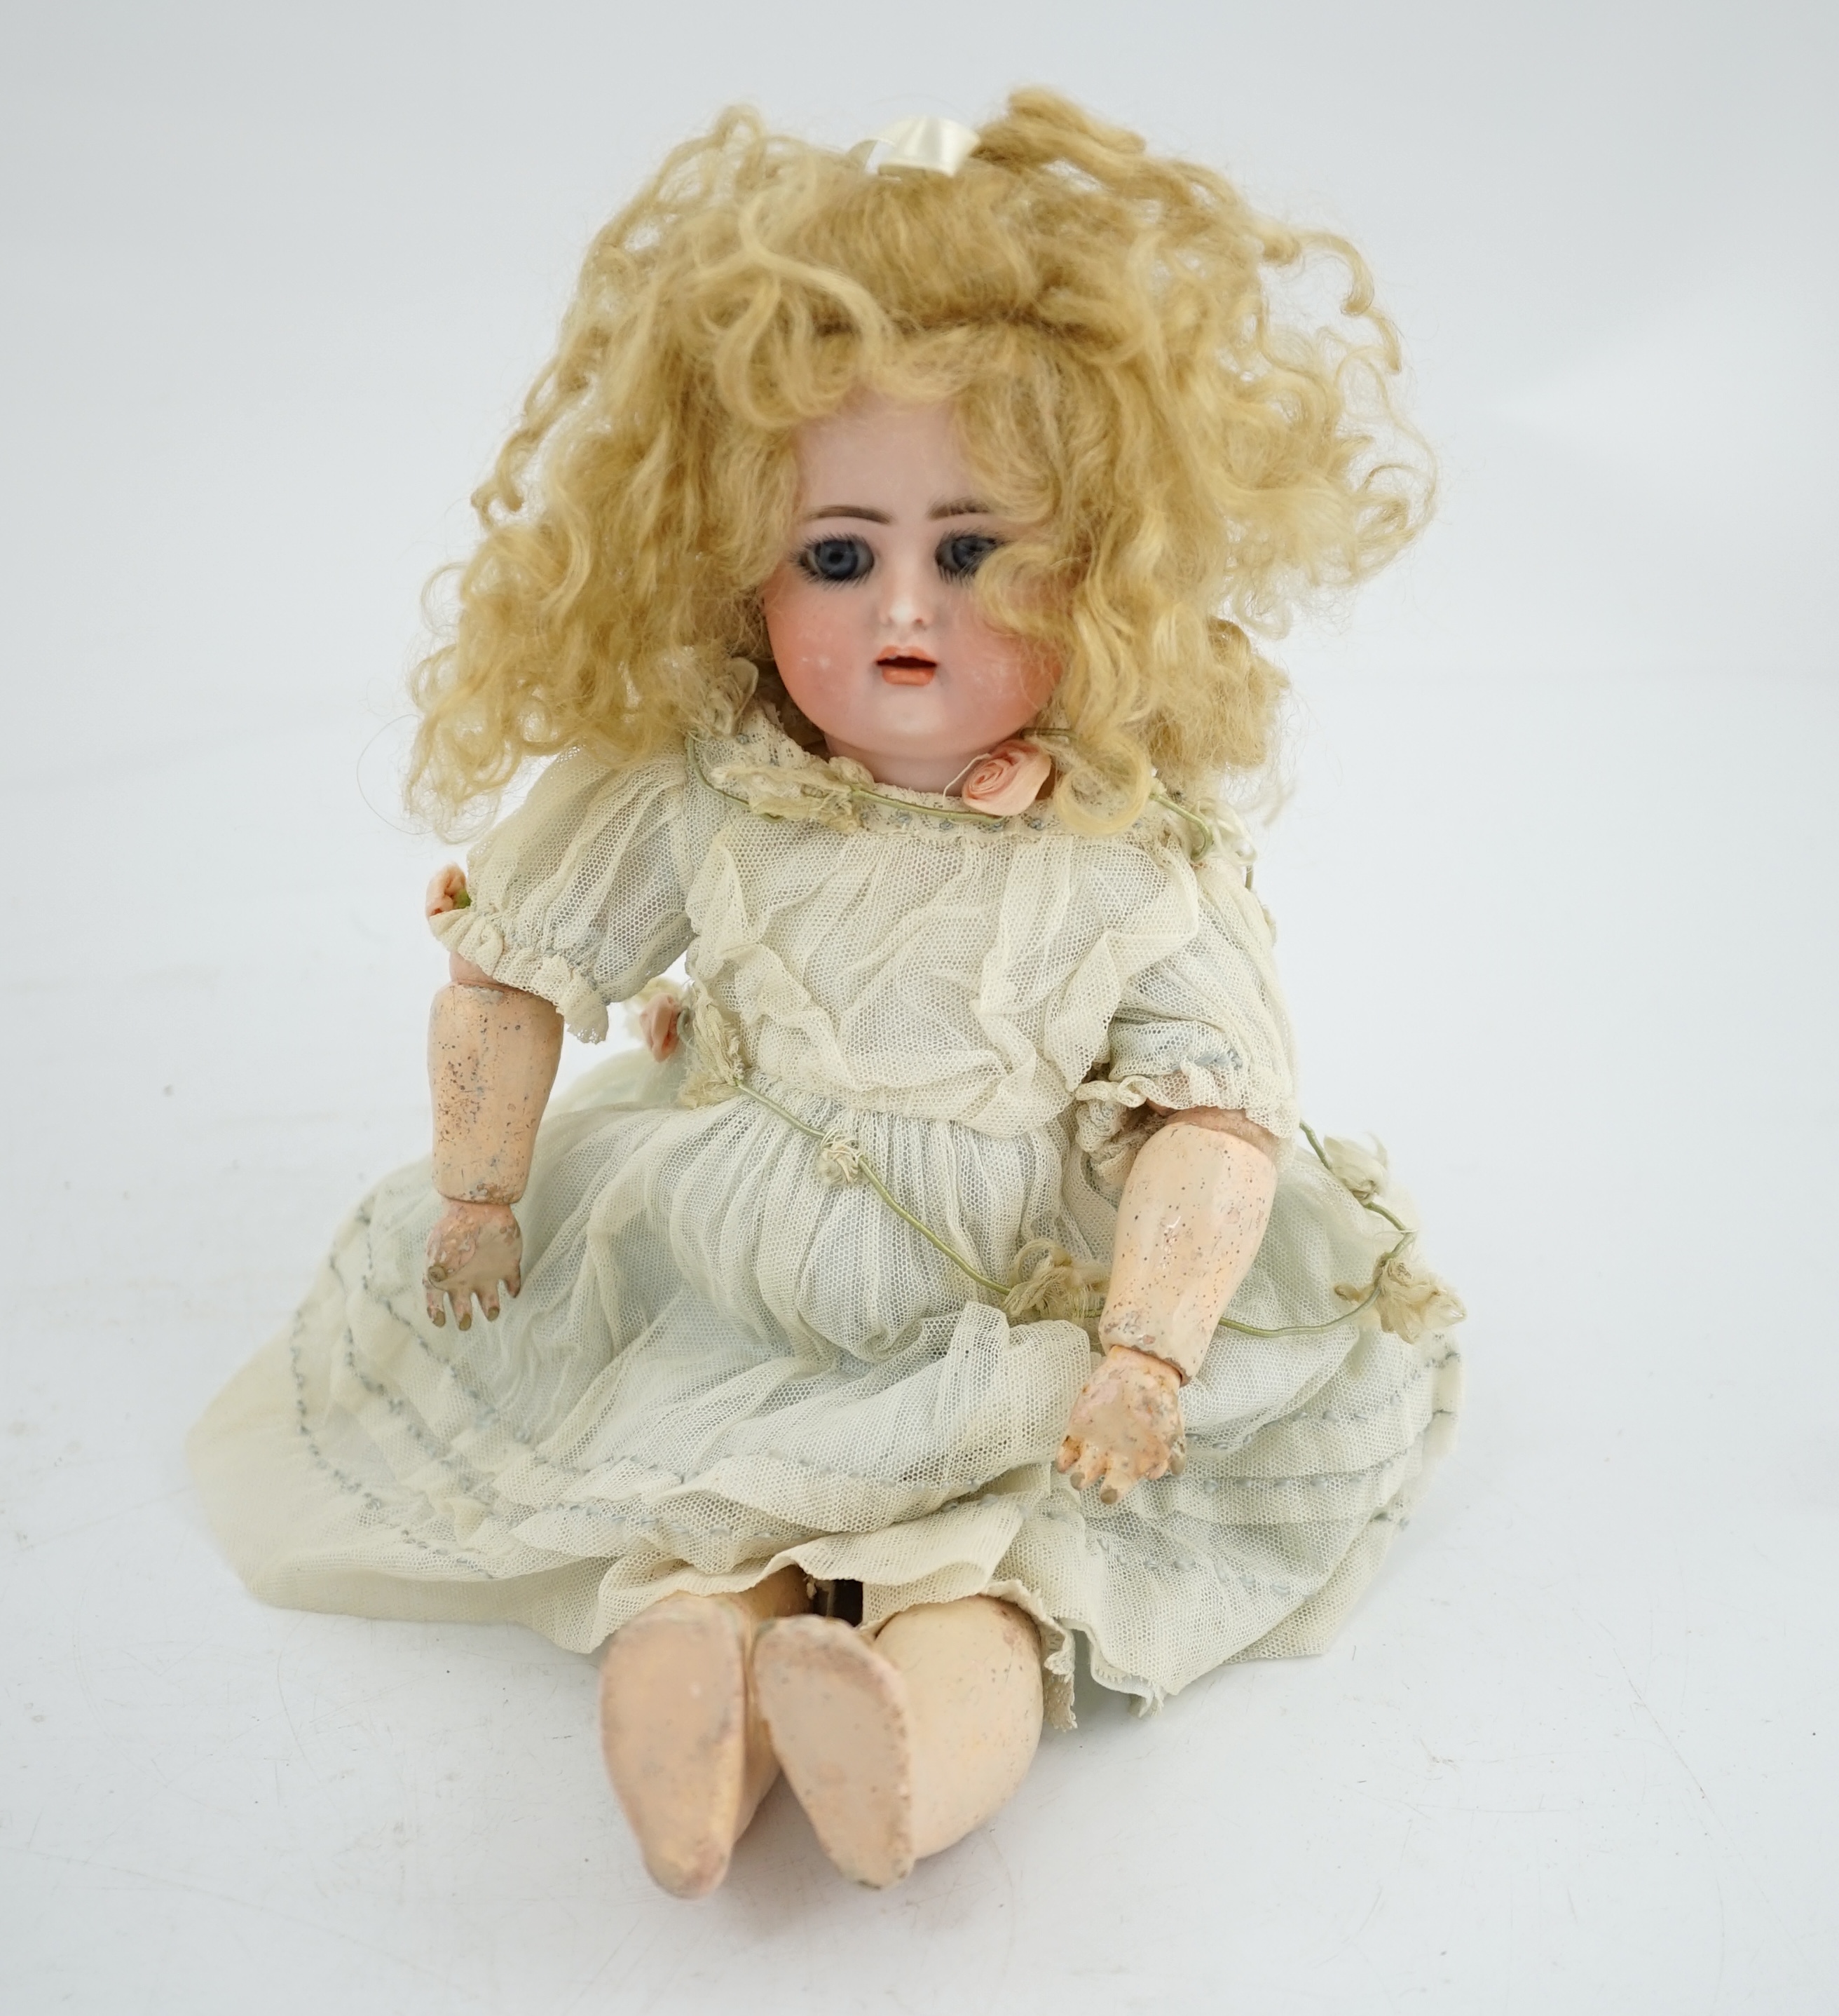 A Kammer & Reinhart / Simon & Halbig bisque doll, pierced ears and sleeping eyes, 34cm